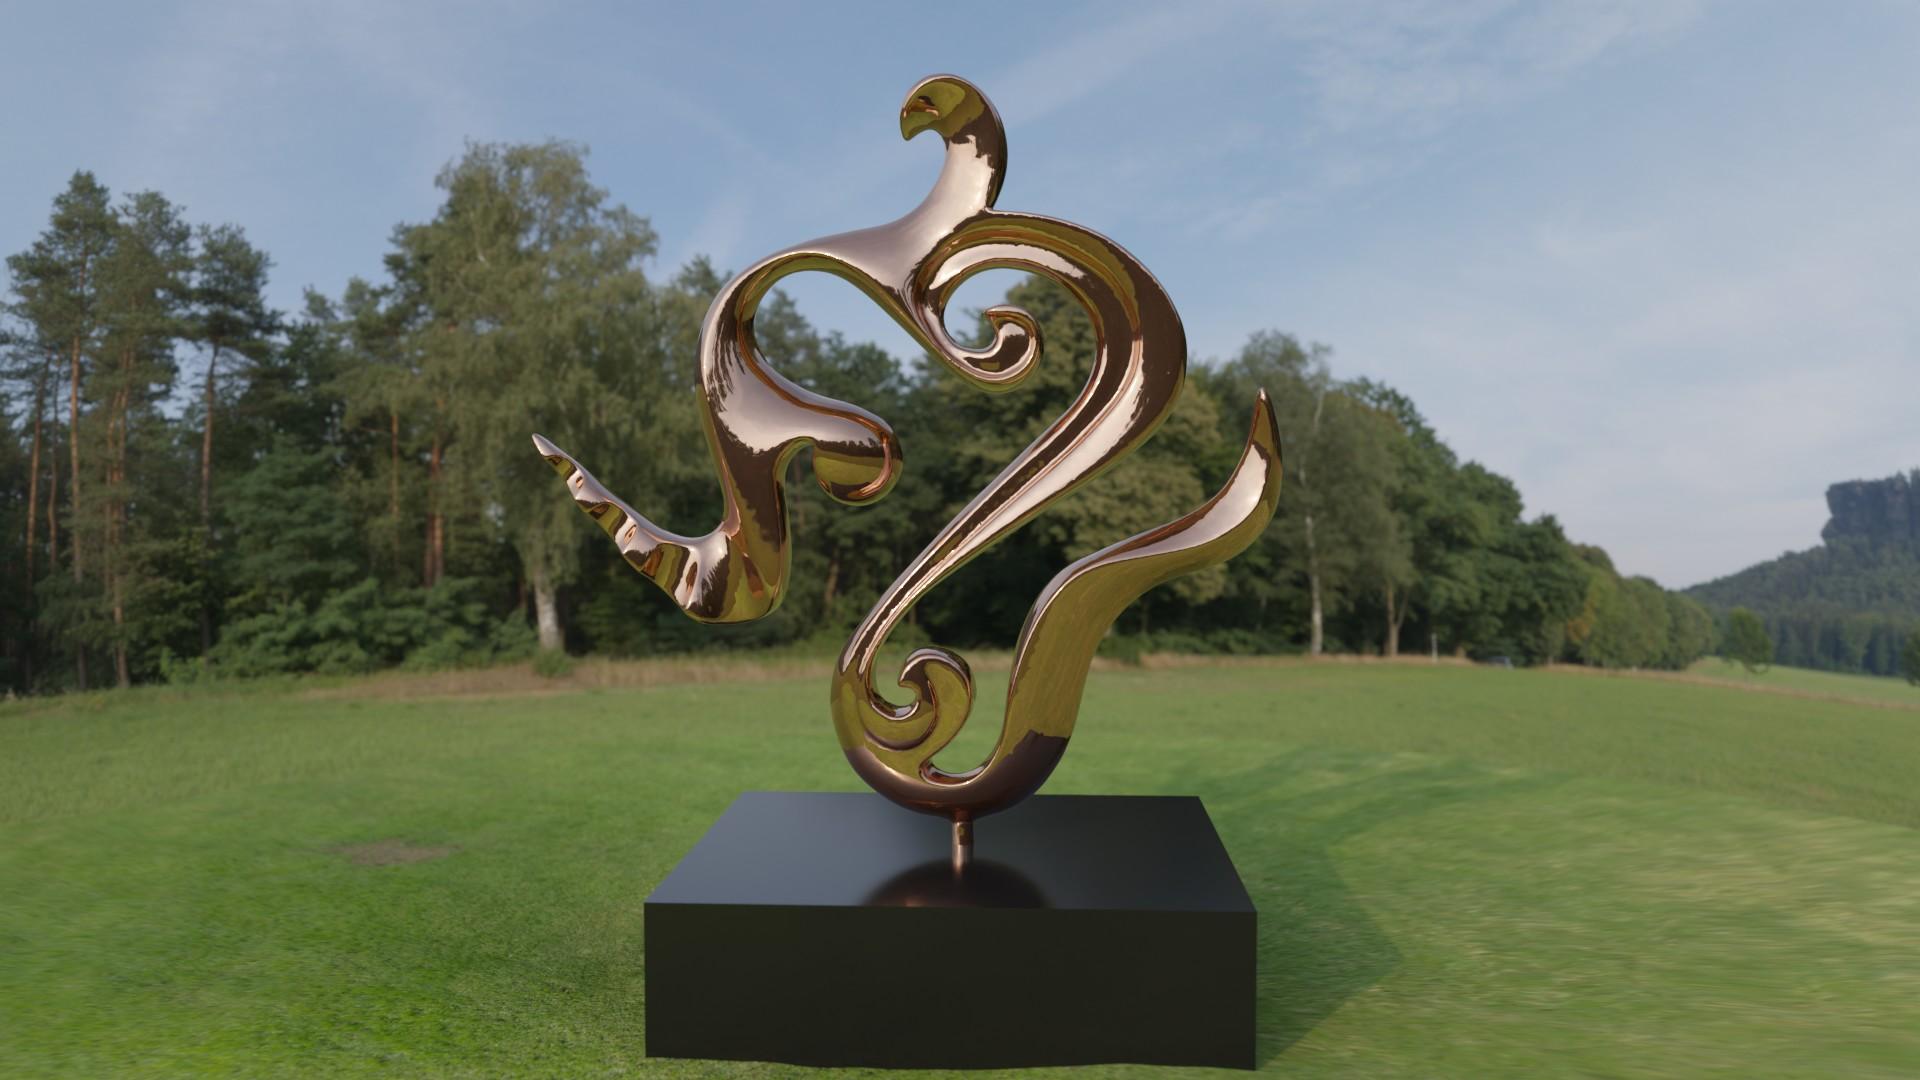 Jan Willem Krijger Abstract Sculpture – The Flow, monumentale Größe